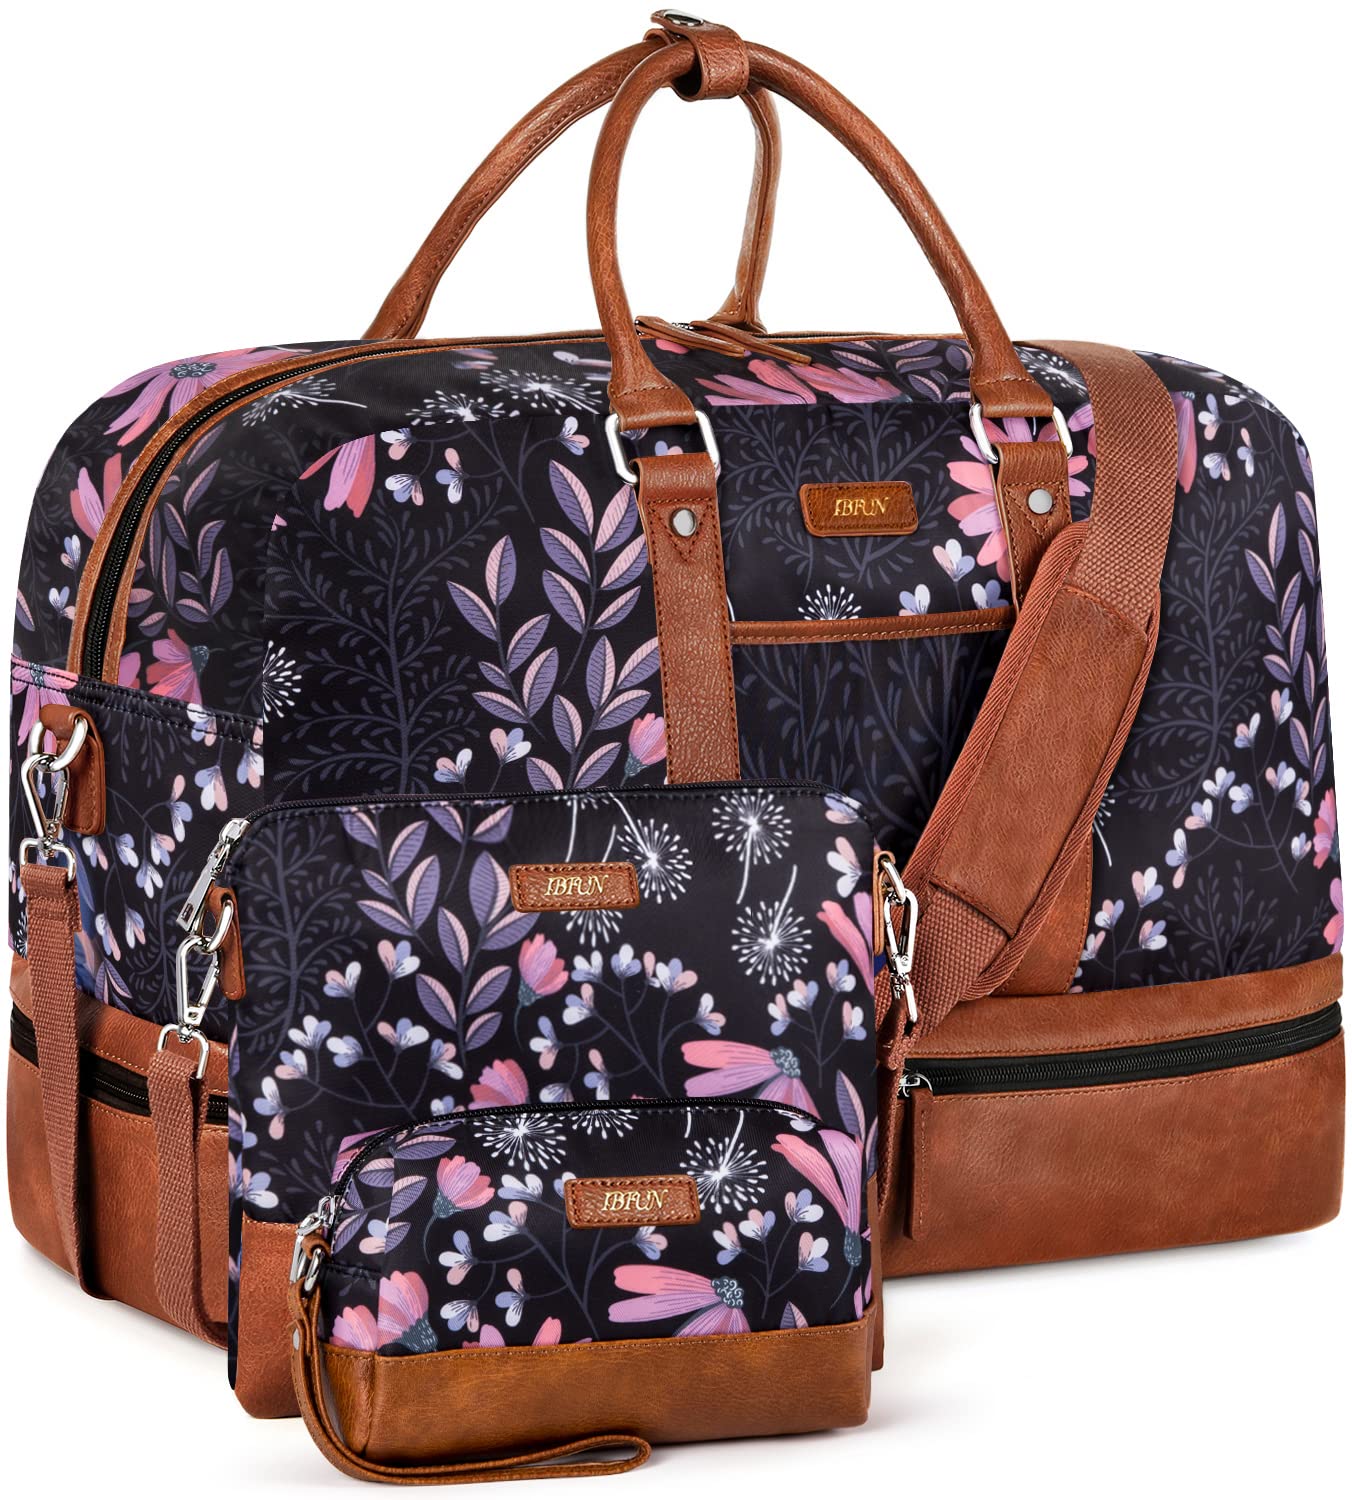 xB Xibang xB 20 Inches Weekender Duffle Bag Large Travel Duffel Luggage Bag Waterproof with Top Handle for Women Men, Women's, Black